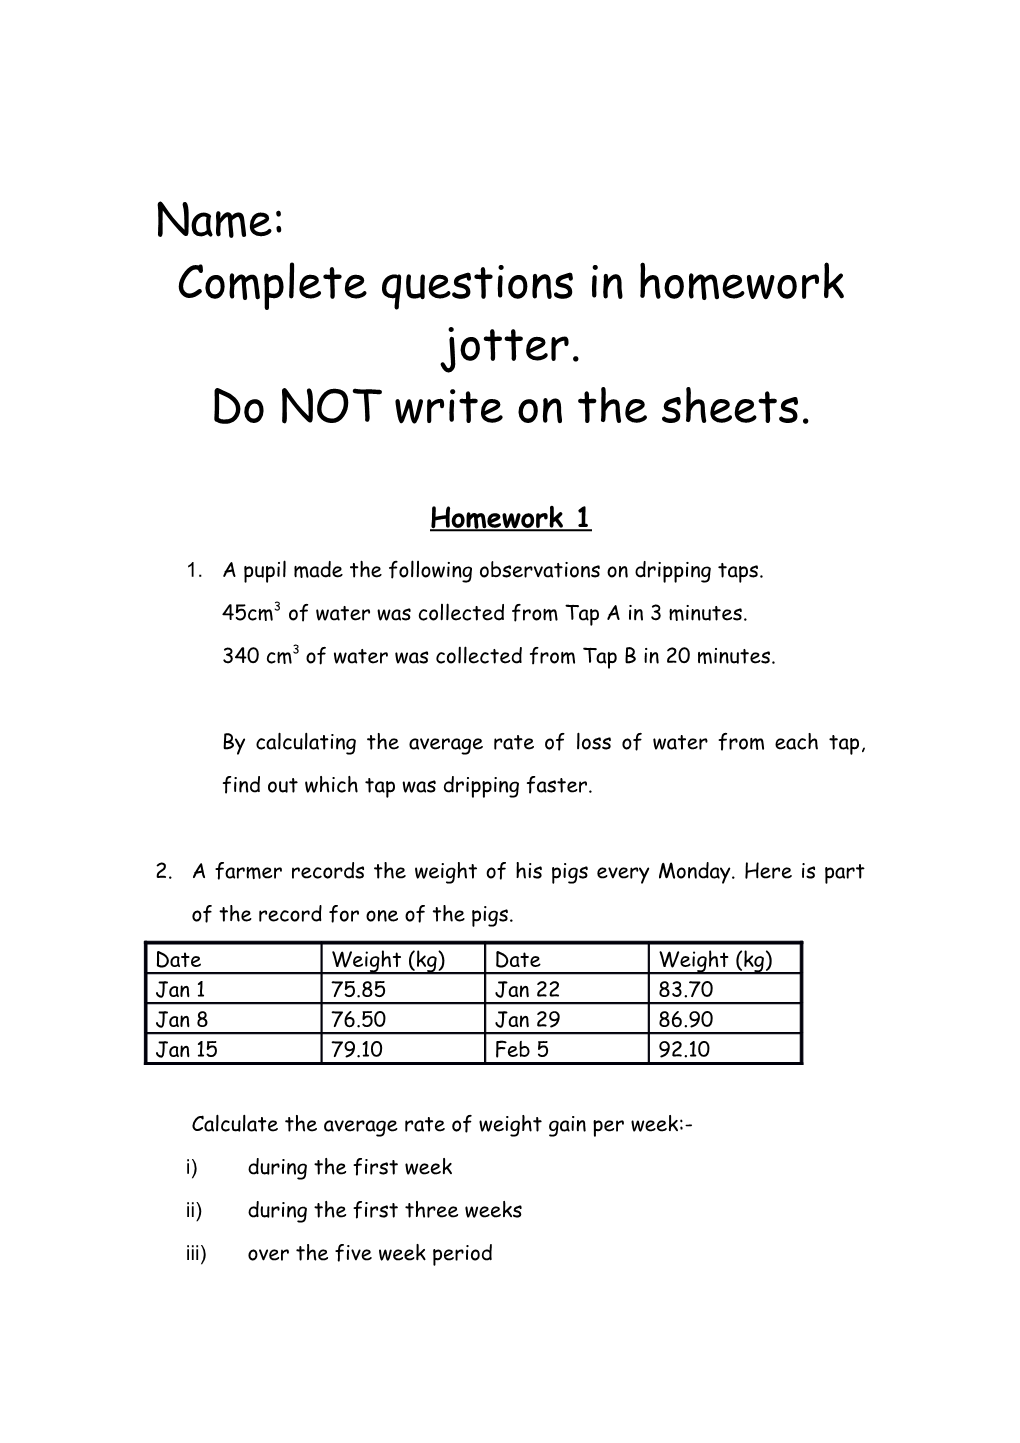 Complete Questions in Homework Jotter